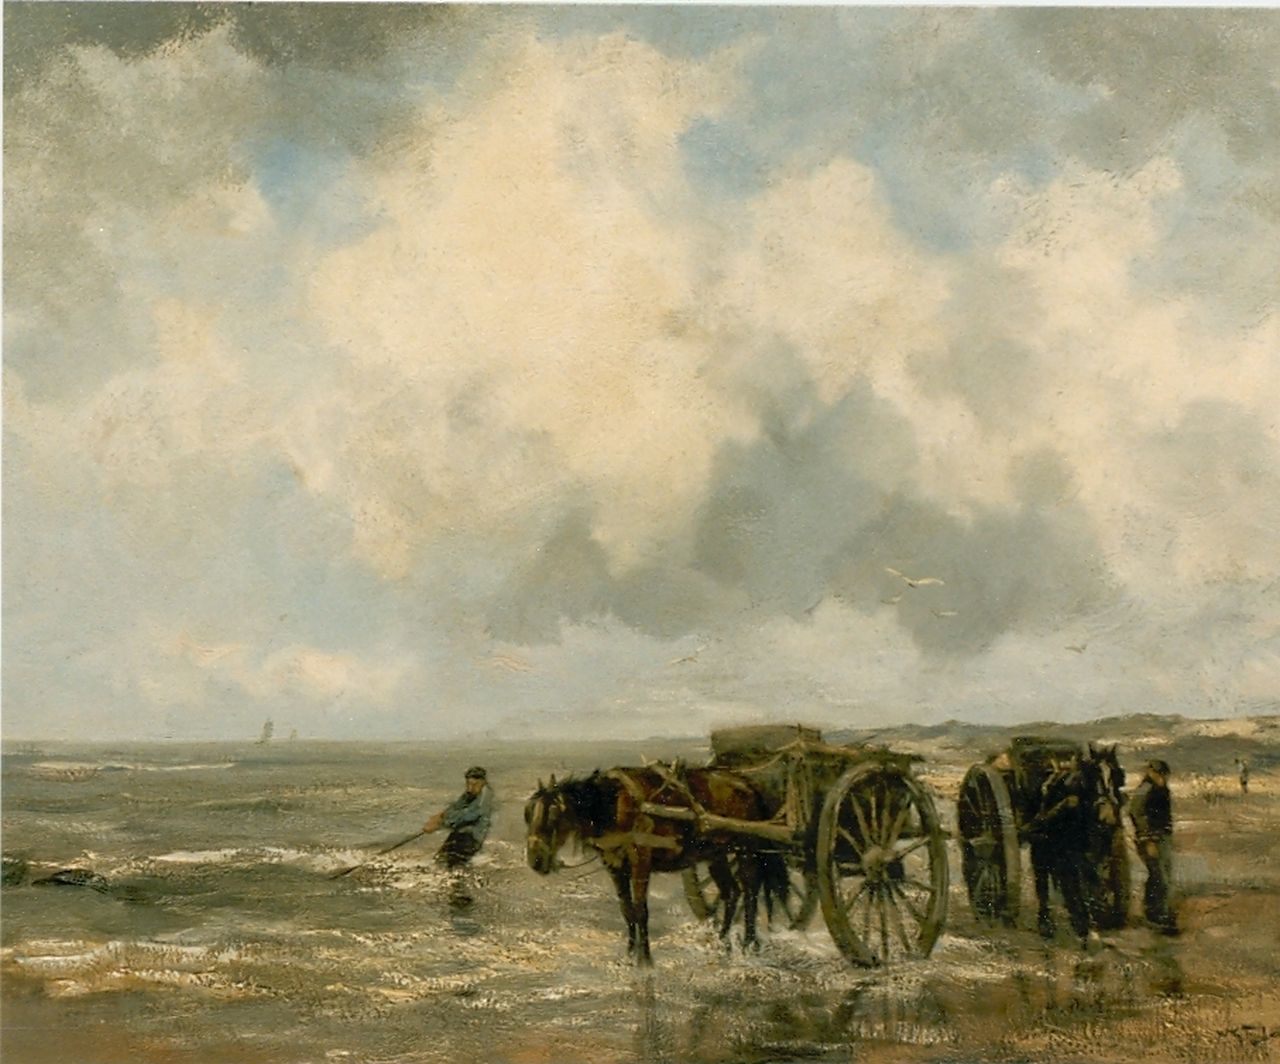 Jansen W.G.F.  | 'Willem' George Frederik Jansen, Shell gatherers on the beach, Öl auf Leinwand 73,5 x 93,1 cm, signed l.r.